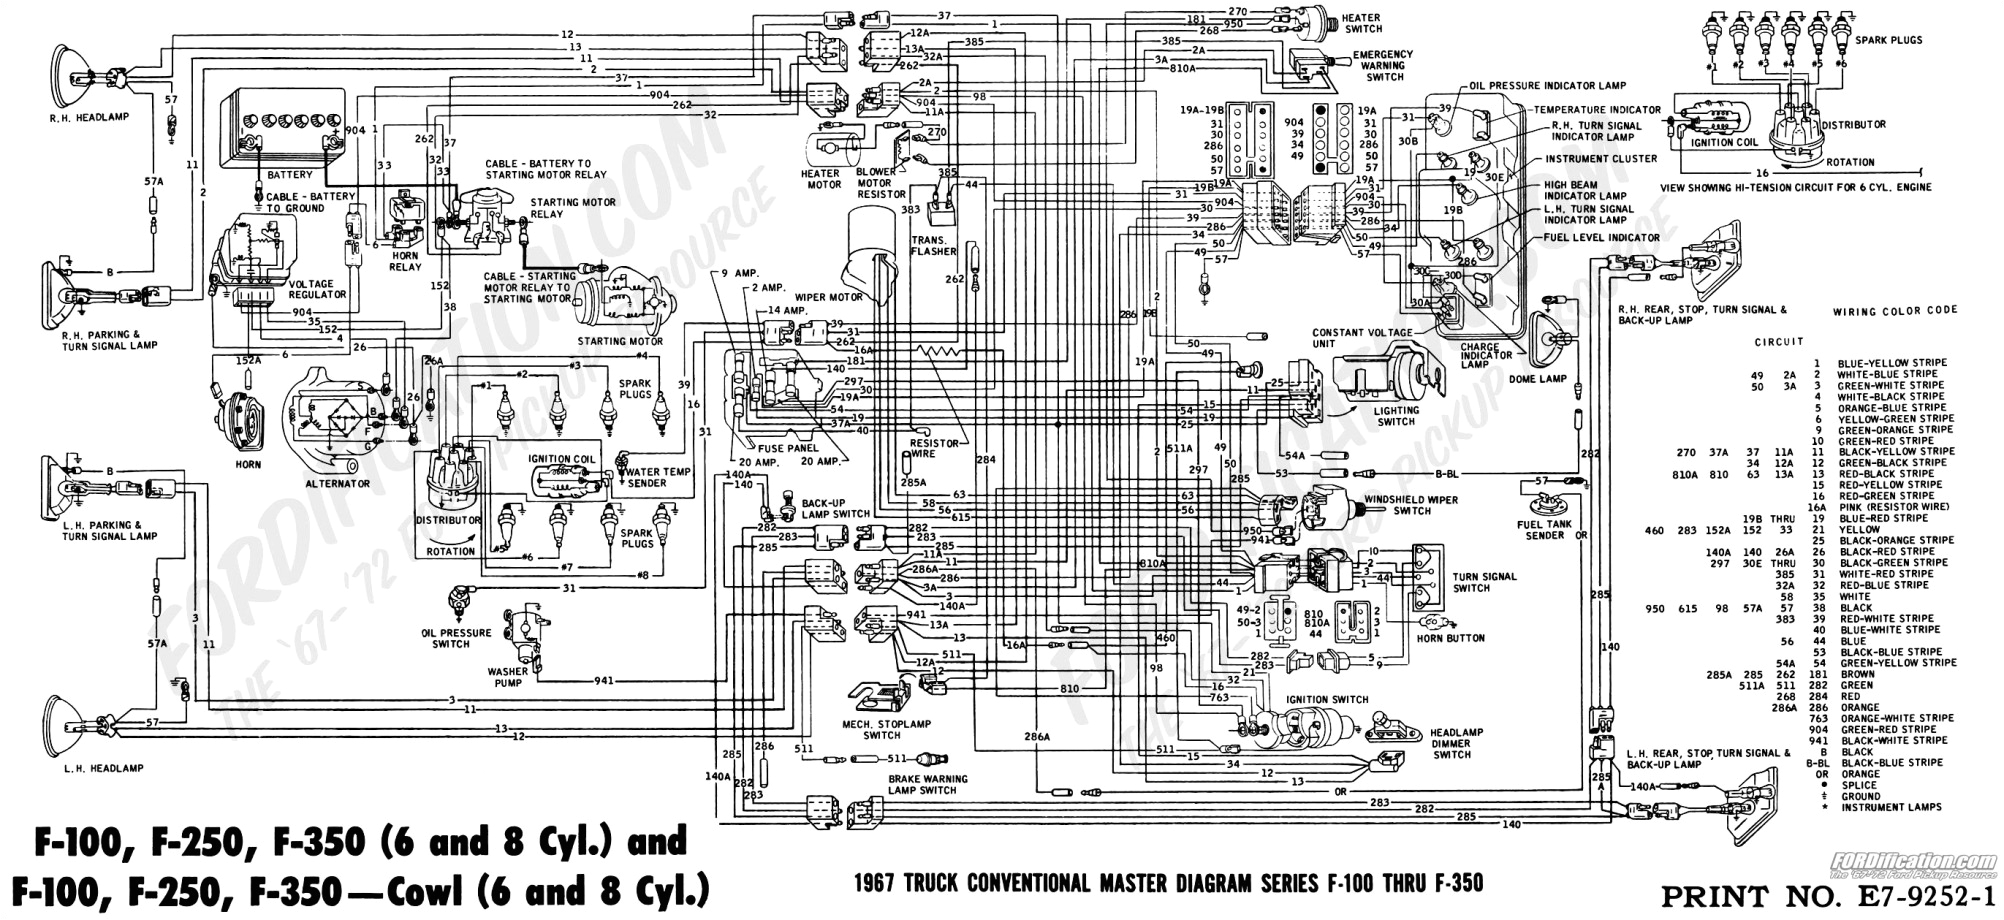 1990 ford wiring diagram wiring diagrams konsult 1990 ford f350 ignition wiring diagram 1990 ford ignition wiring diagram